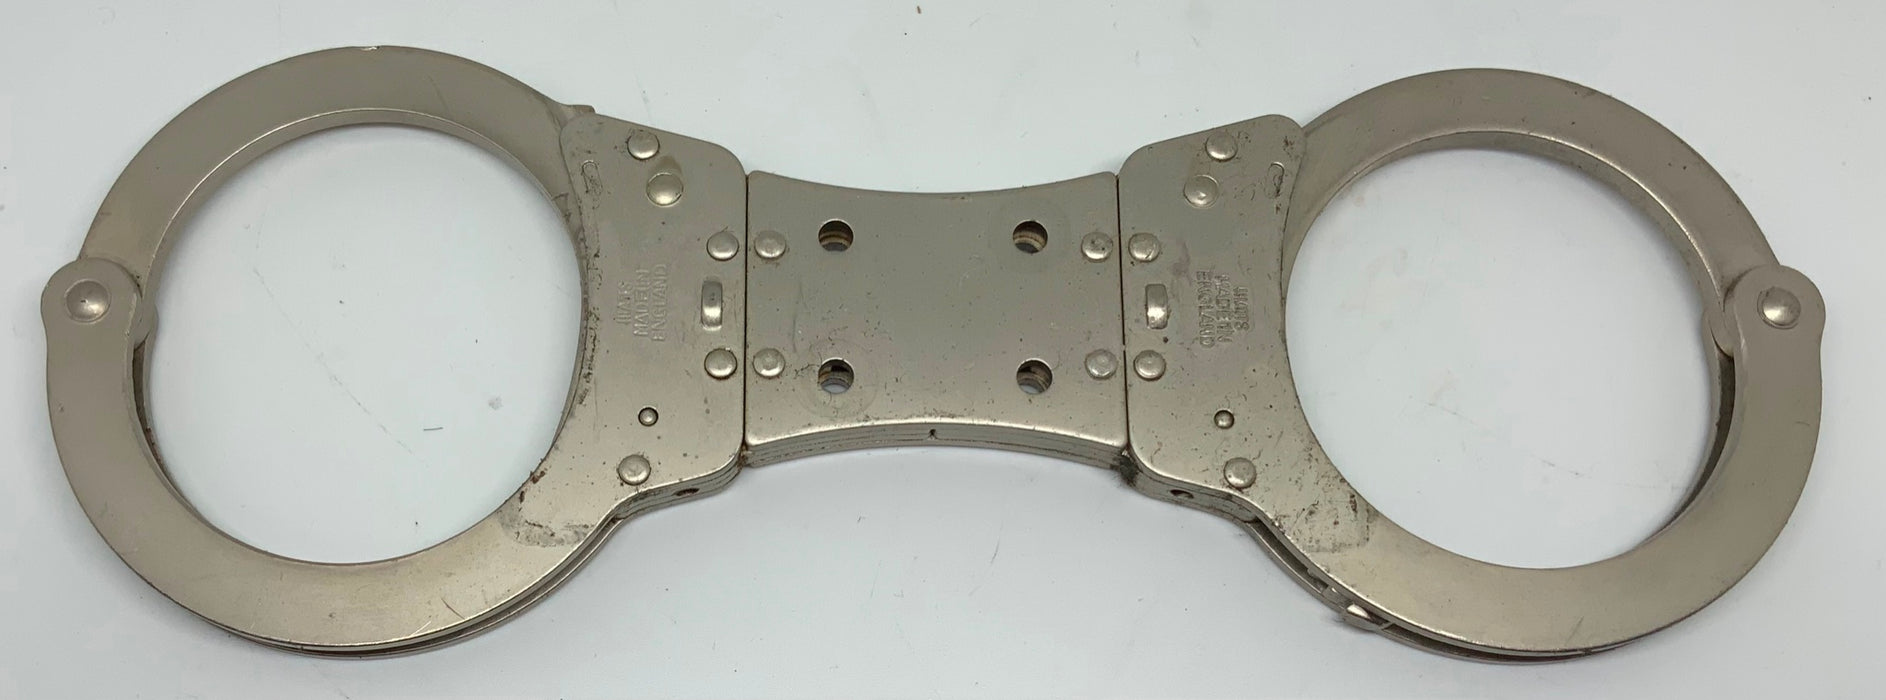 Genuine Hiatts Chrome Rigid Handcuffs Speedcuffs TCH 840 Grade C Without Case